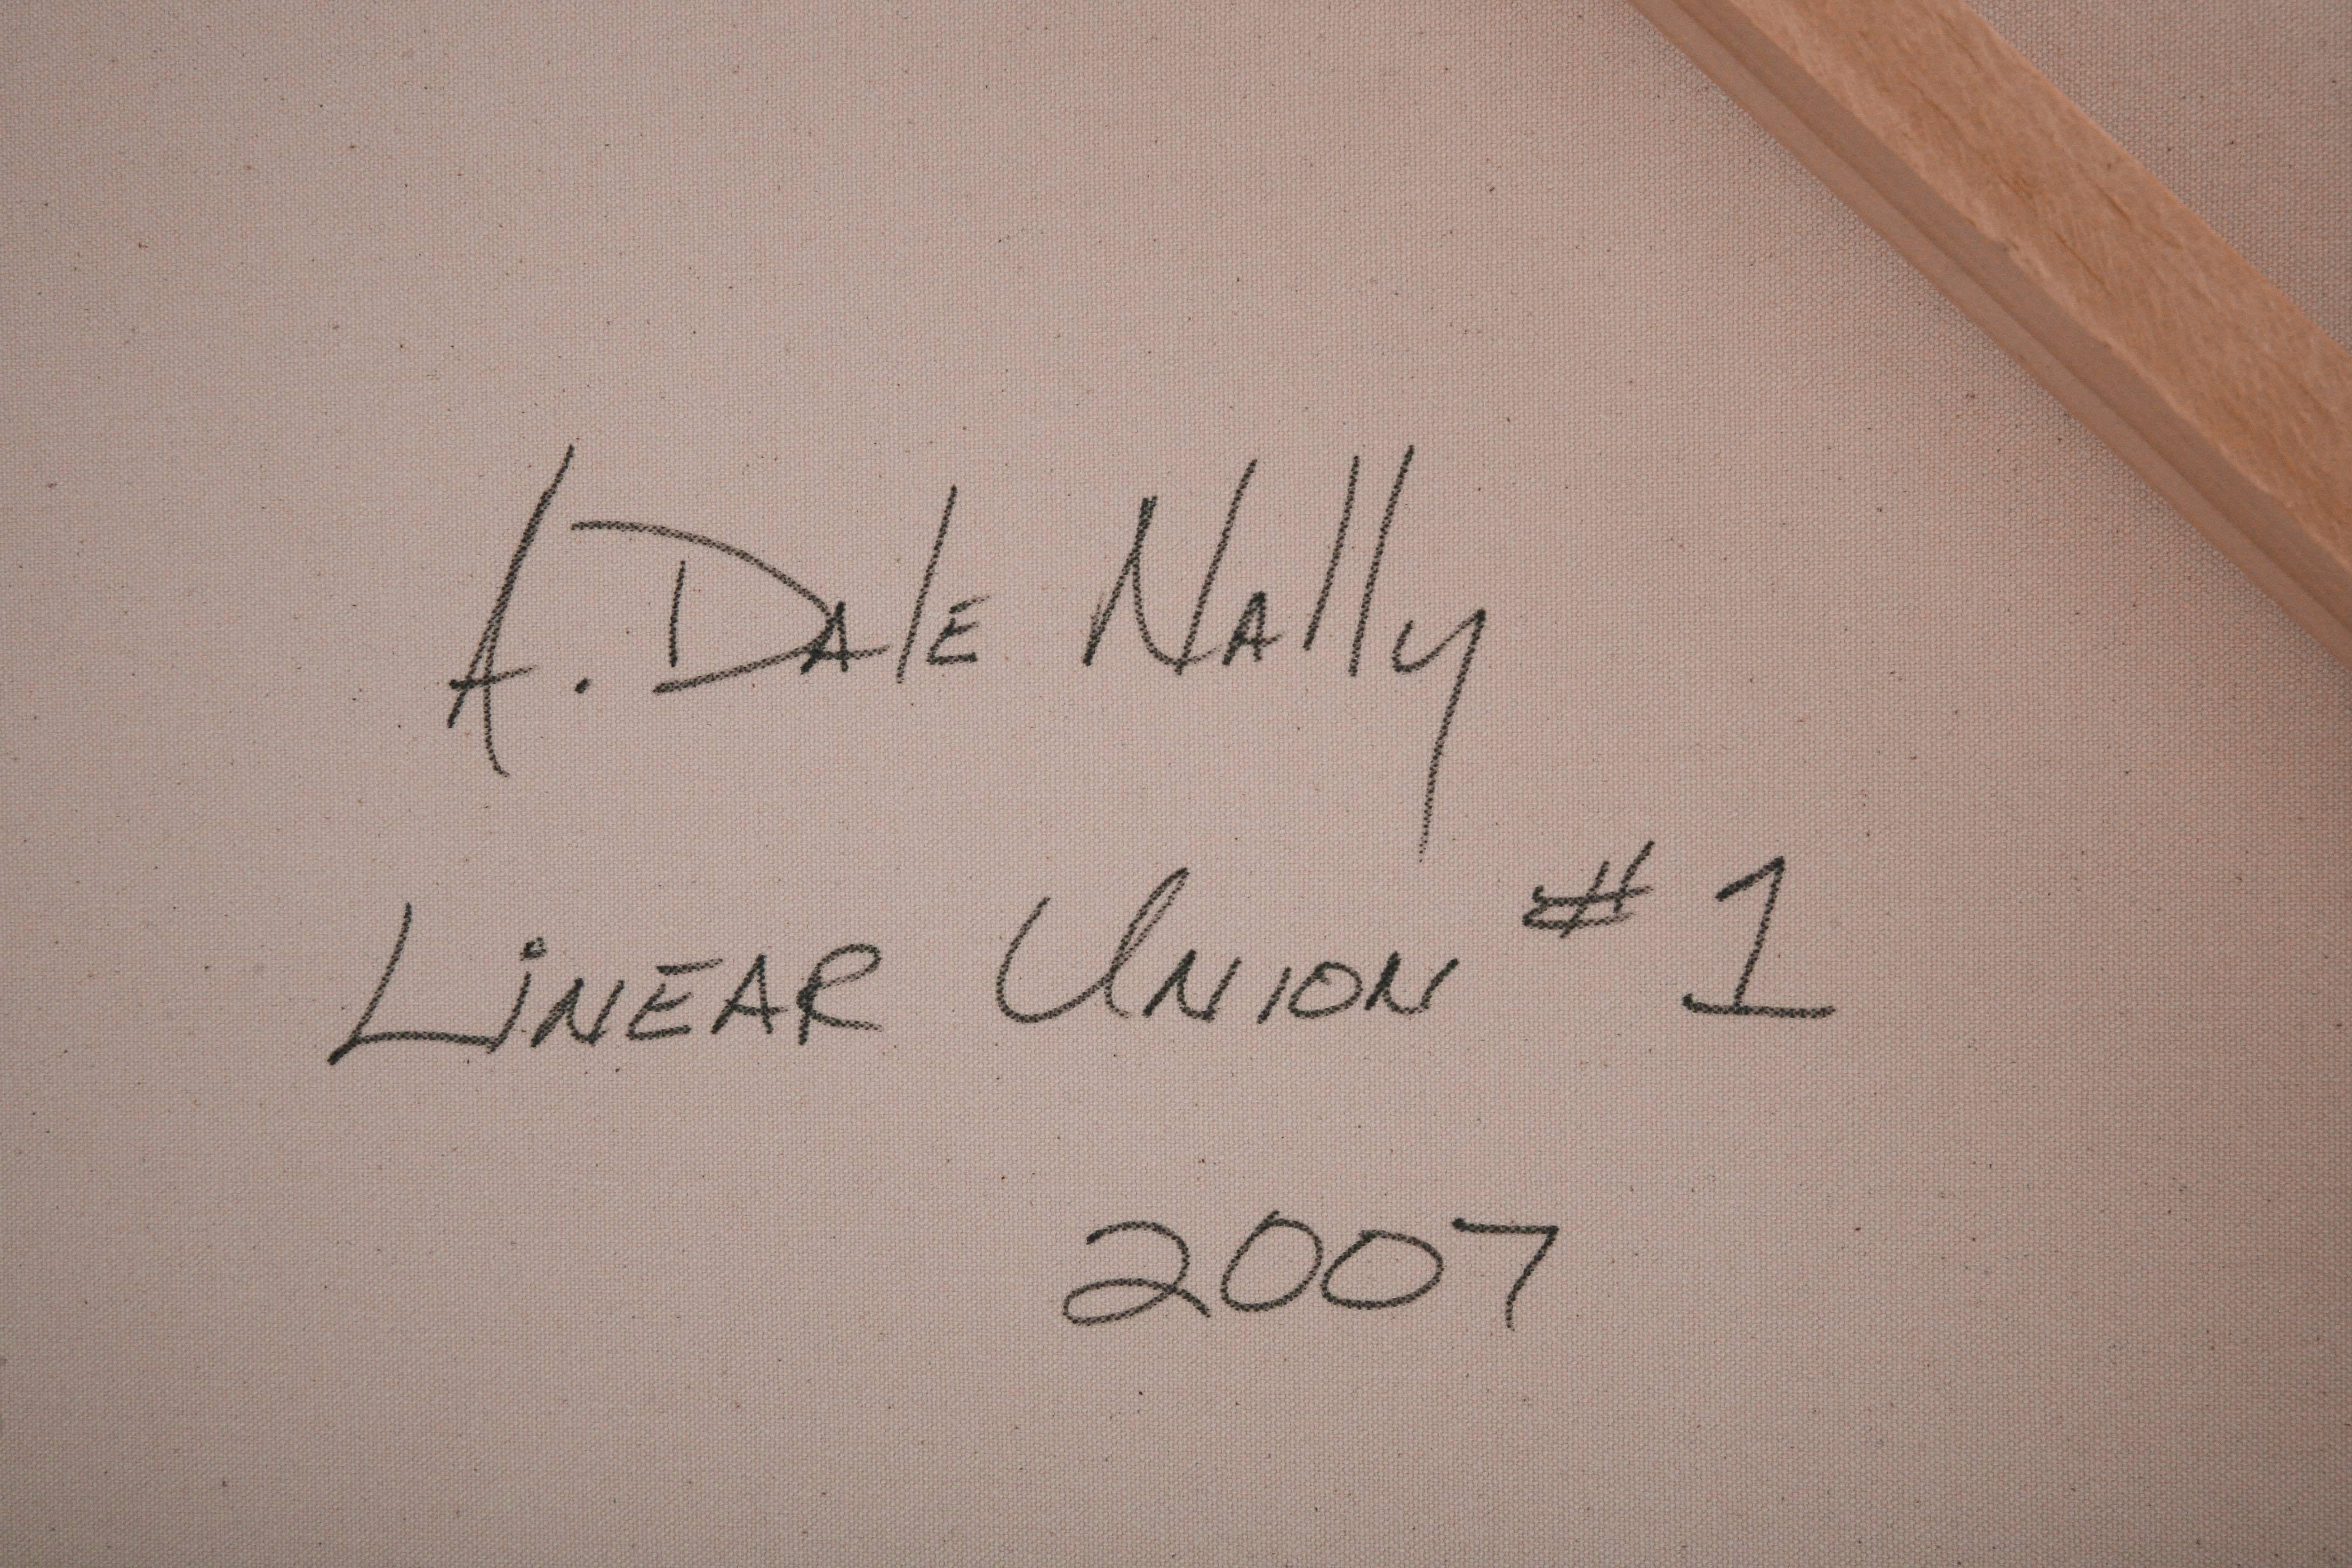 A. Dale Nally, Large Minimalist Sstyle Painting, 2007 3